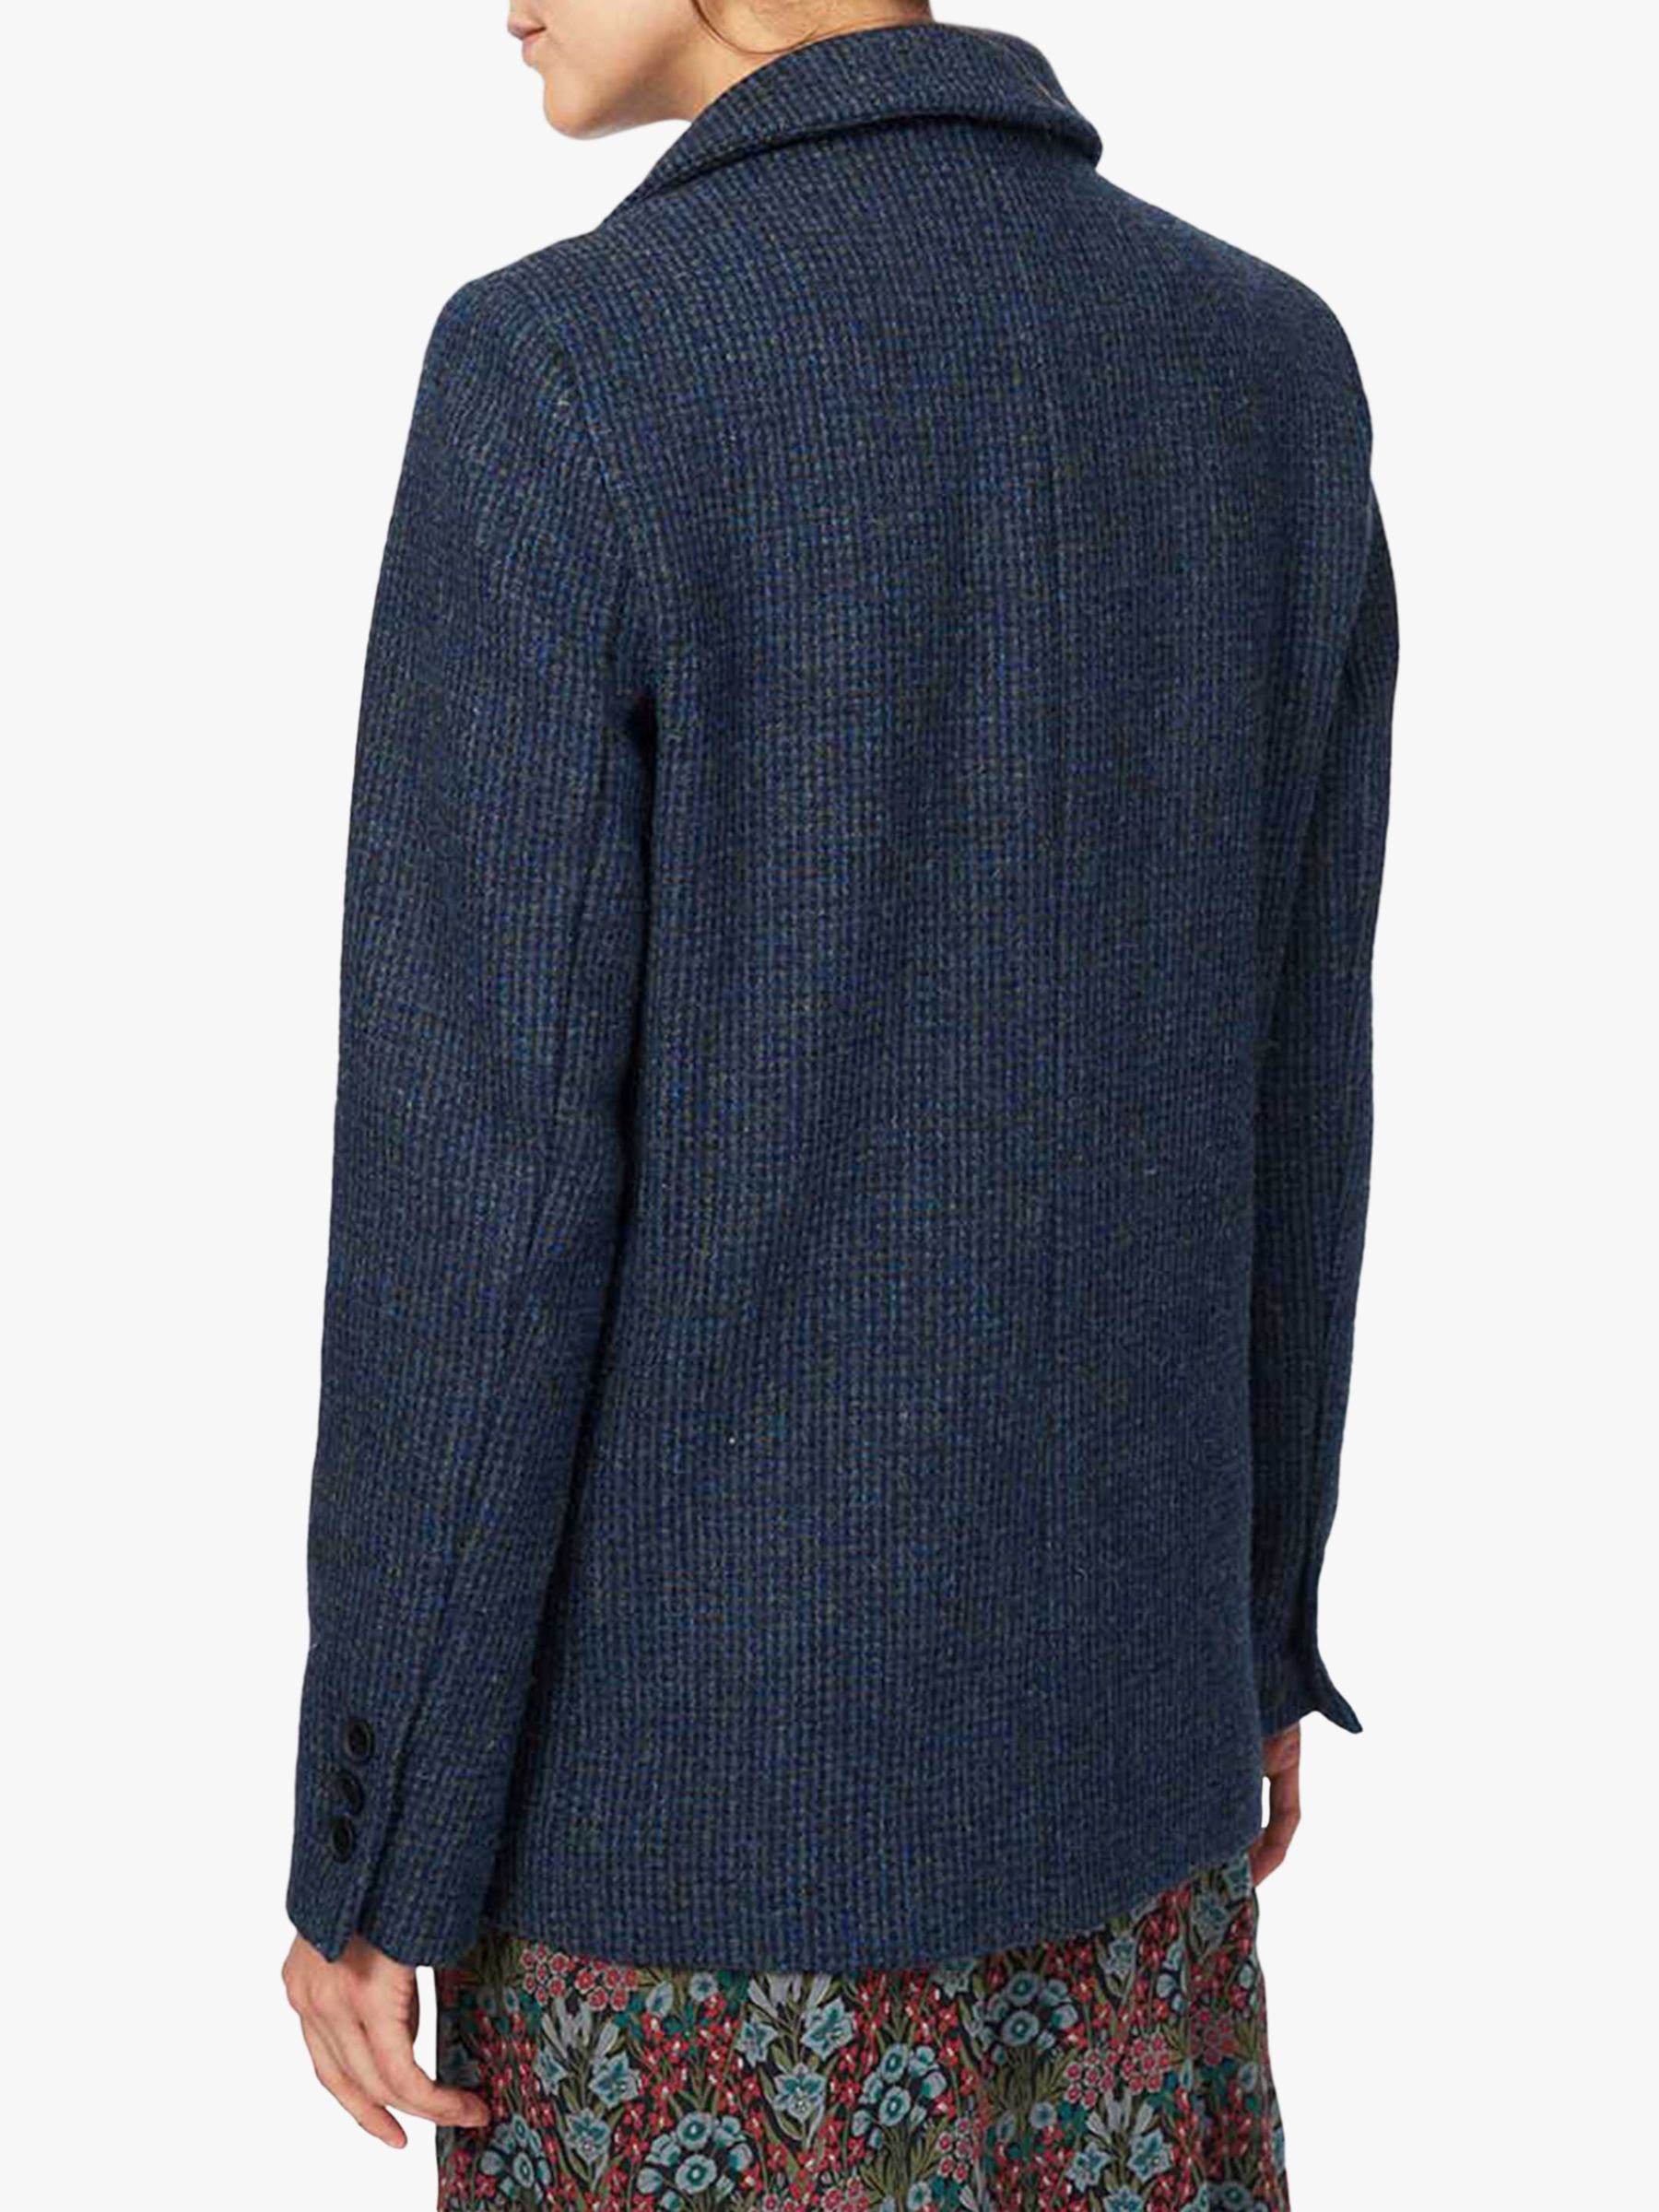 Harris Tweed Scarf in Light Grey Blue With a John Lewis Fabric 